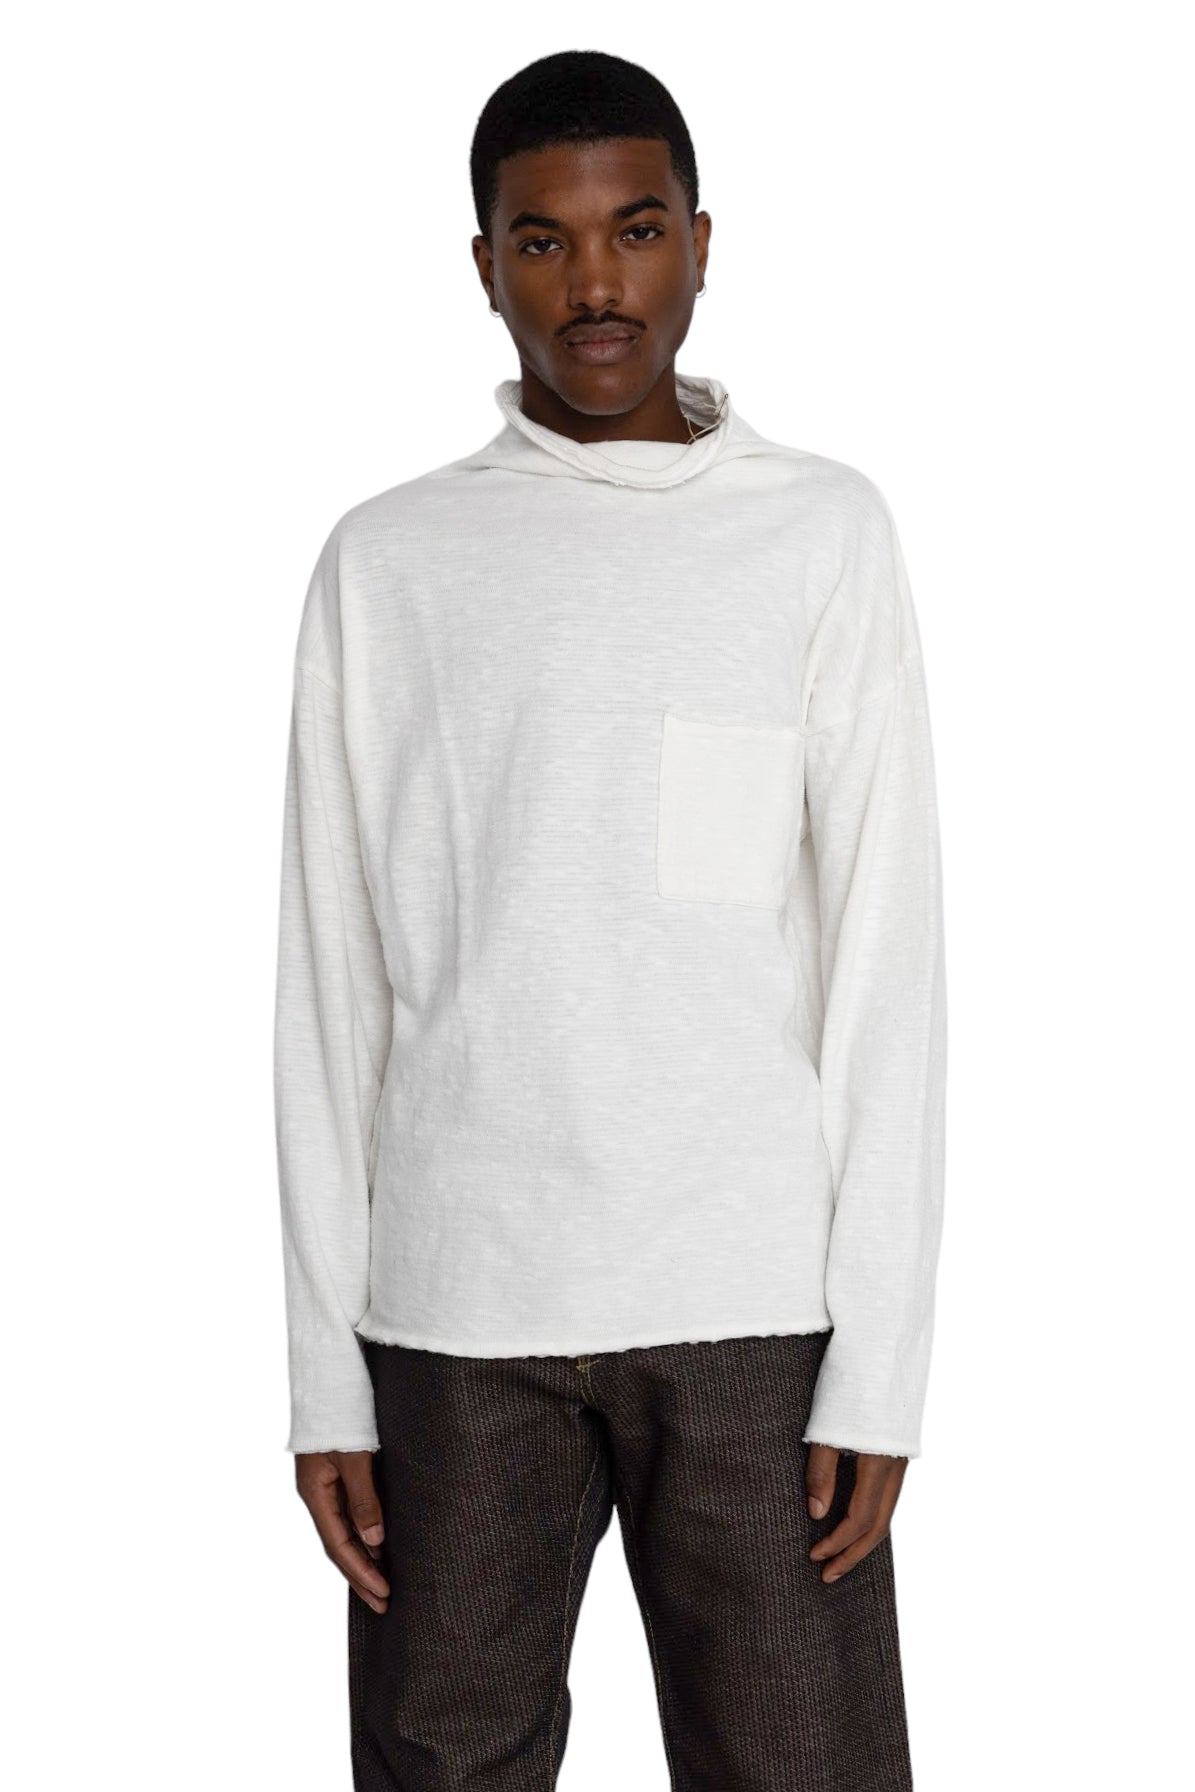 AMUSE Knit GANDHI Long Sleeve T - White